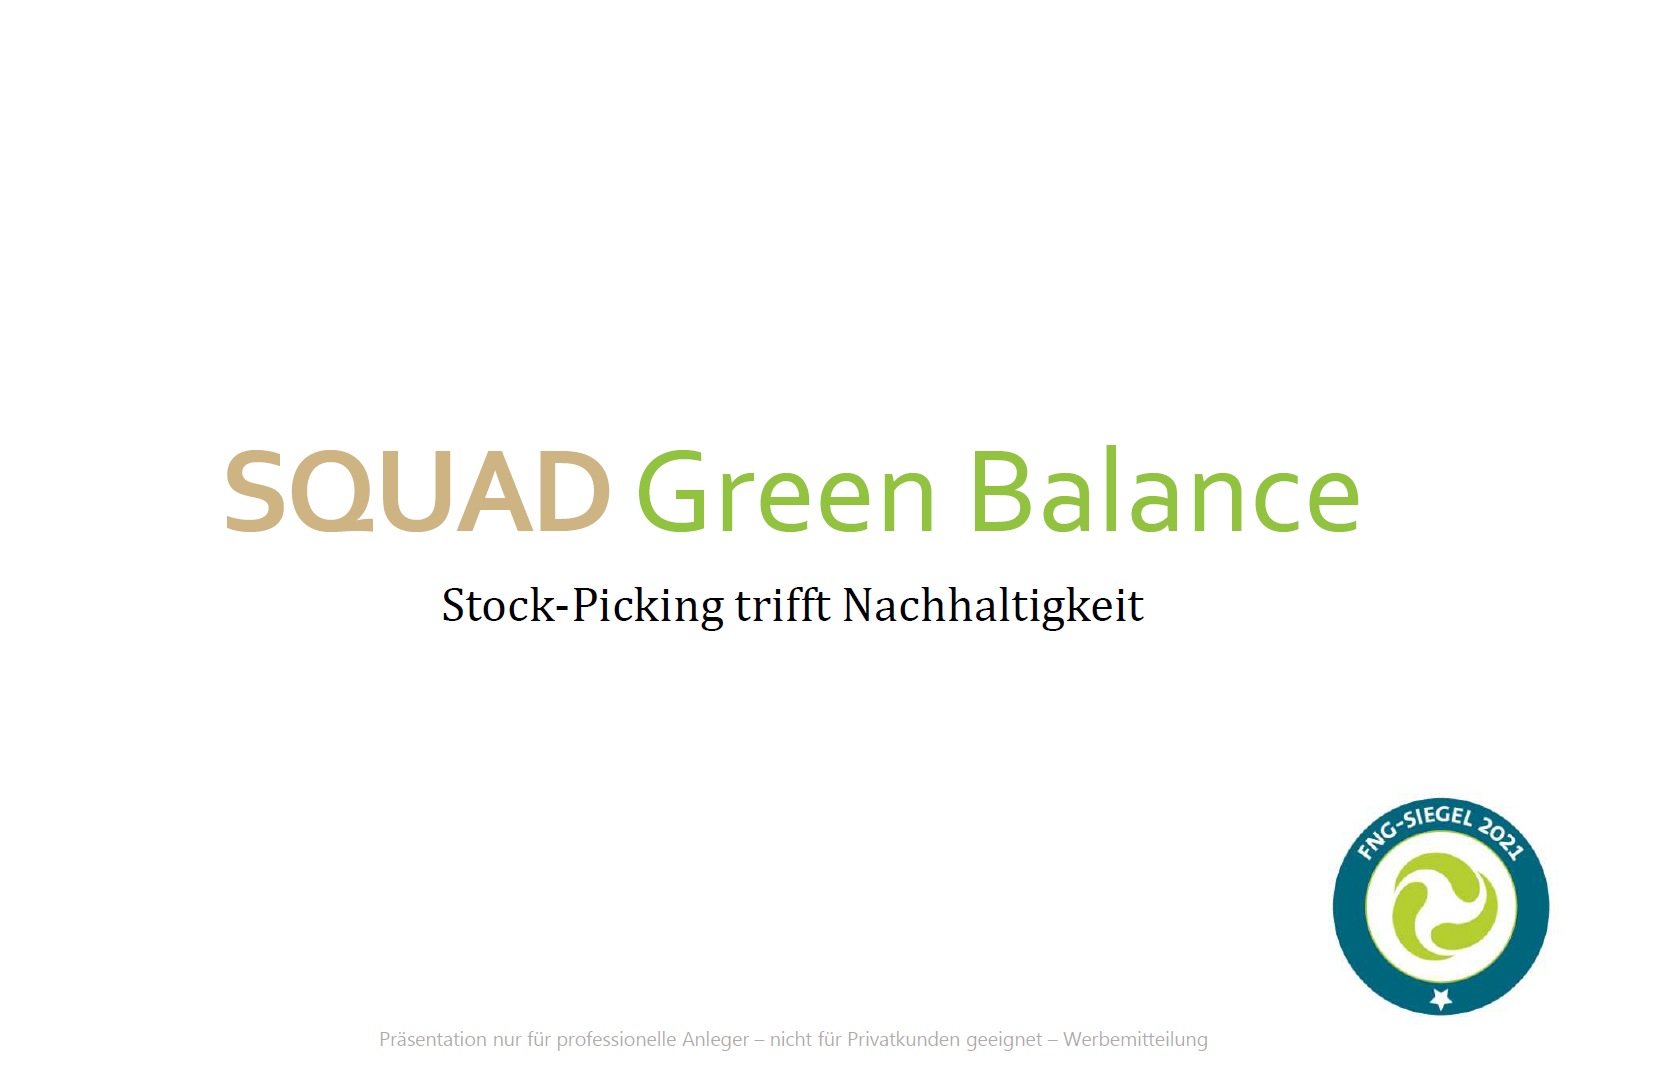 SQUAD Green Balance – Stock-Picking trifft Nachhaltigkeit